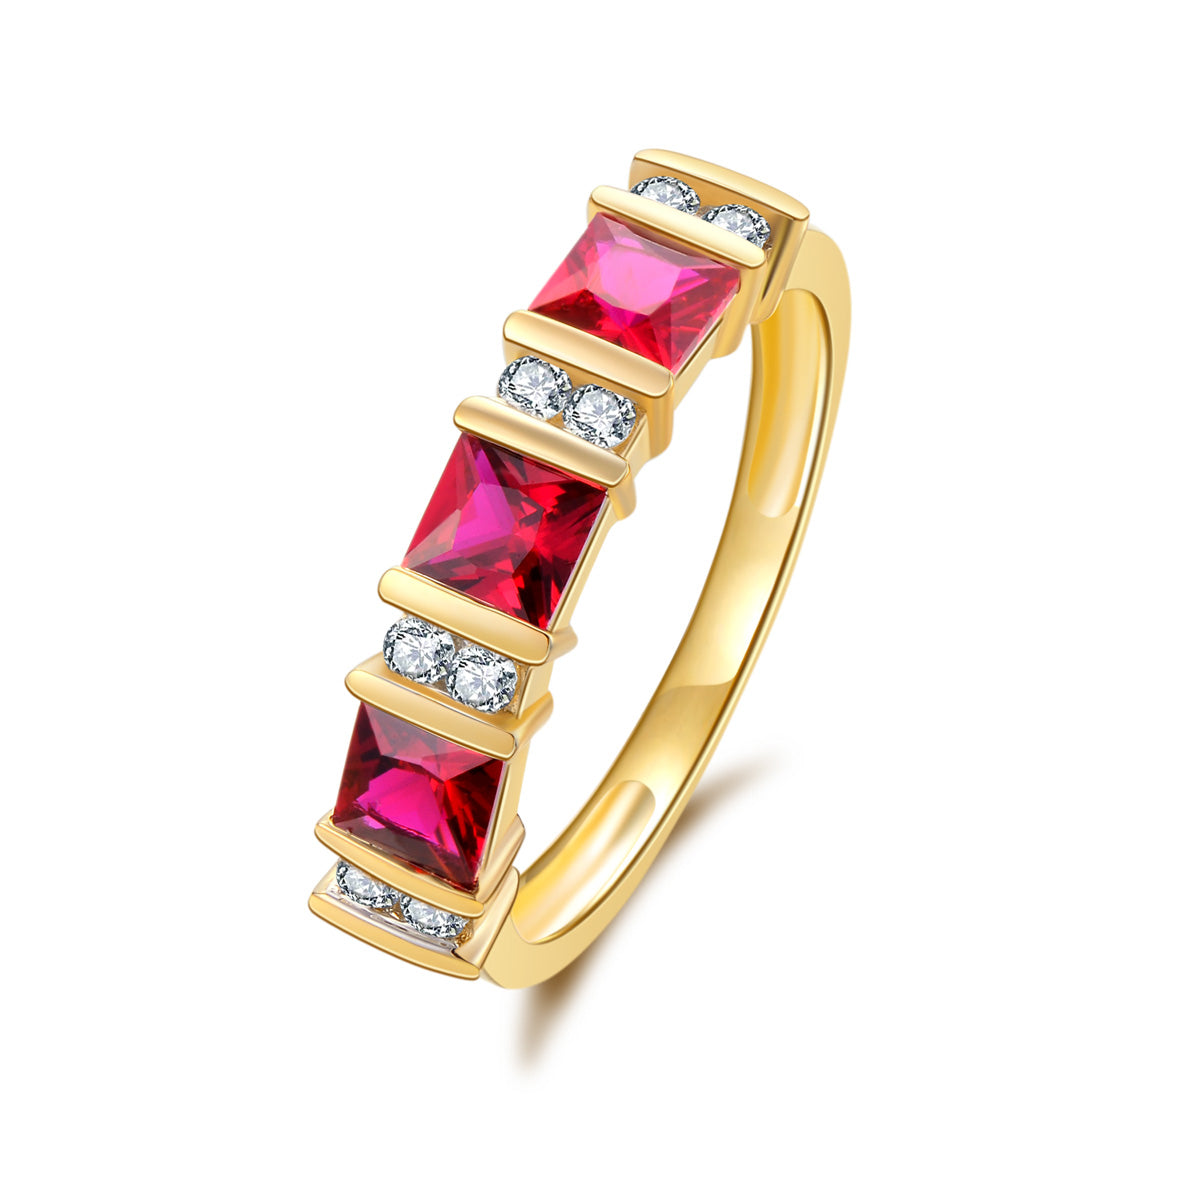 9ct Yellow Gold Created Ruby & Diamond Ring